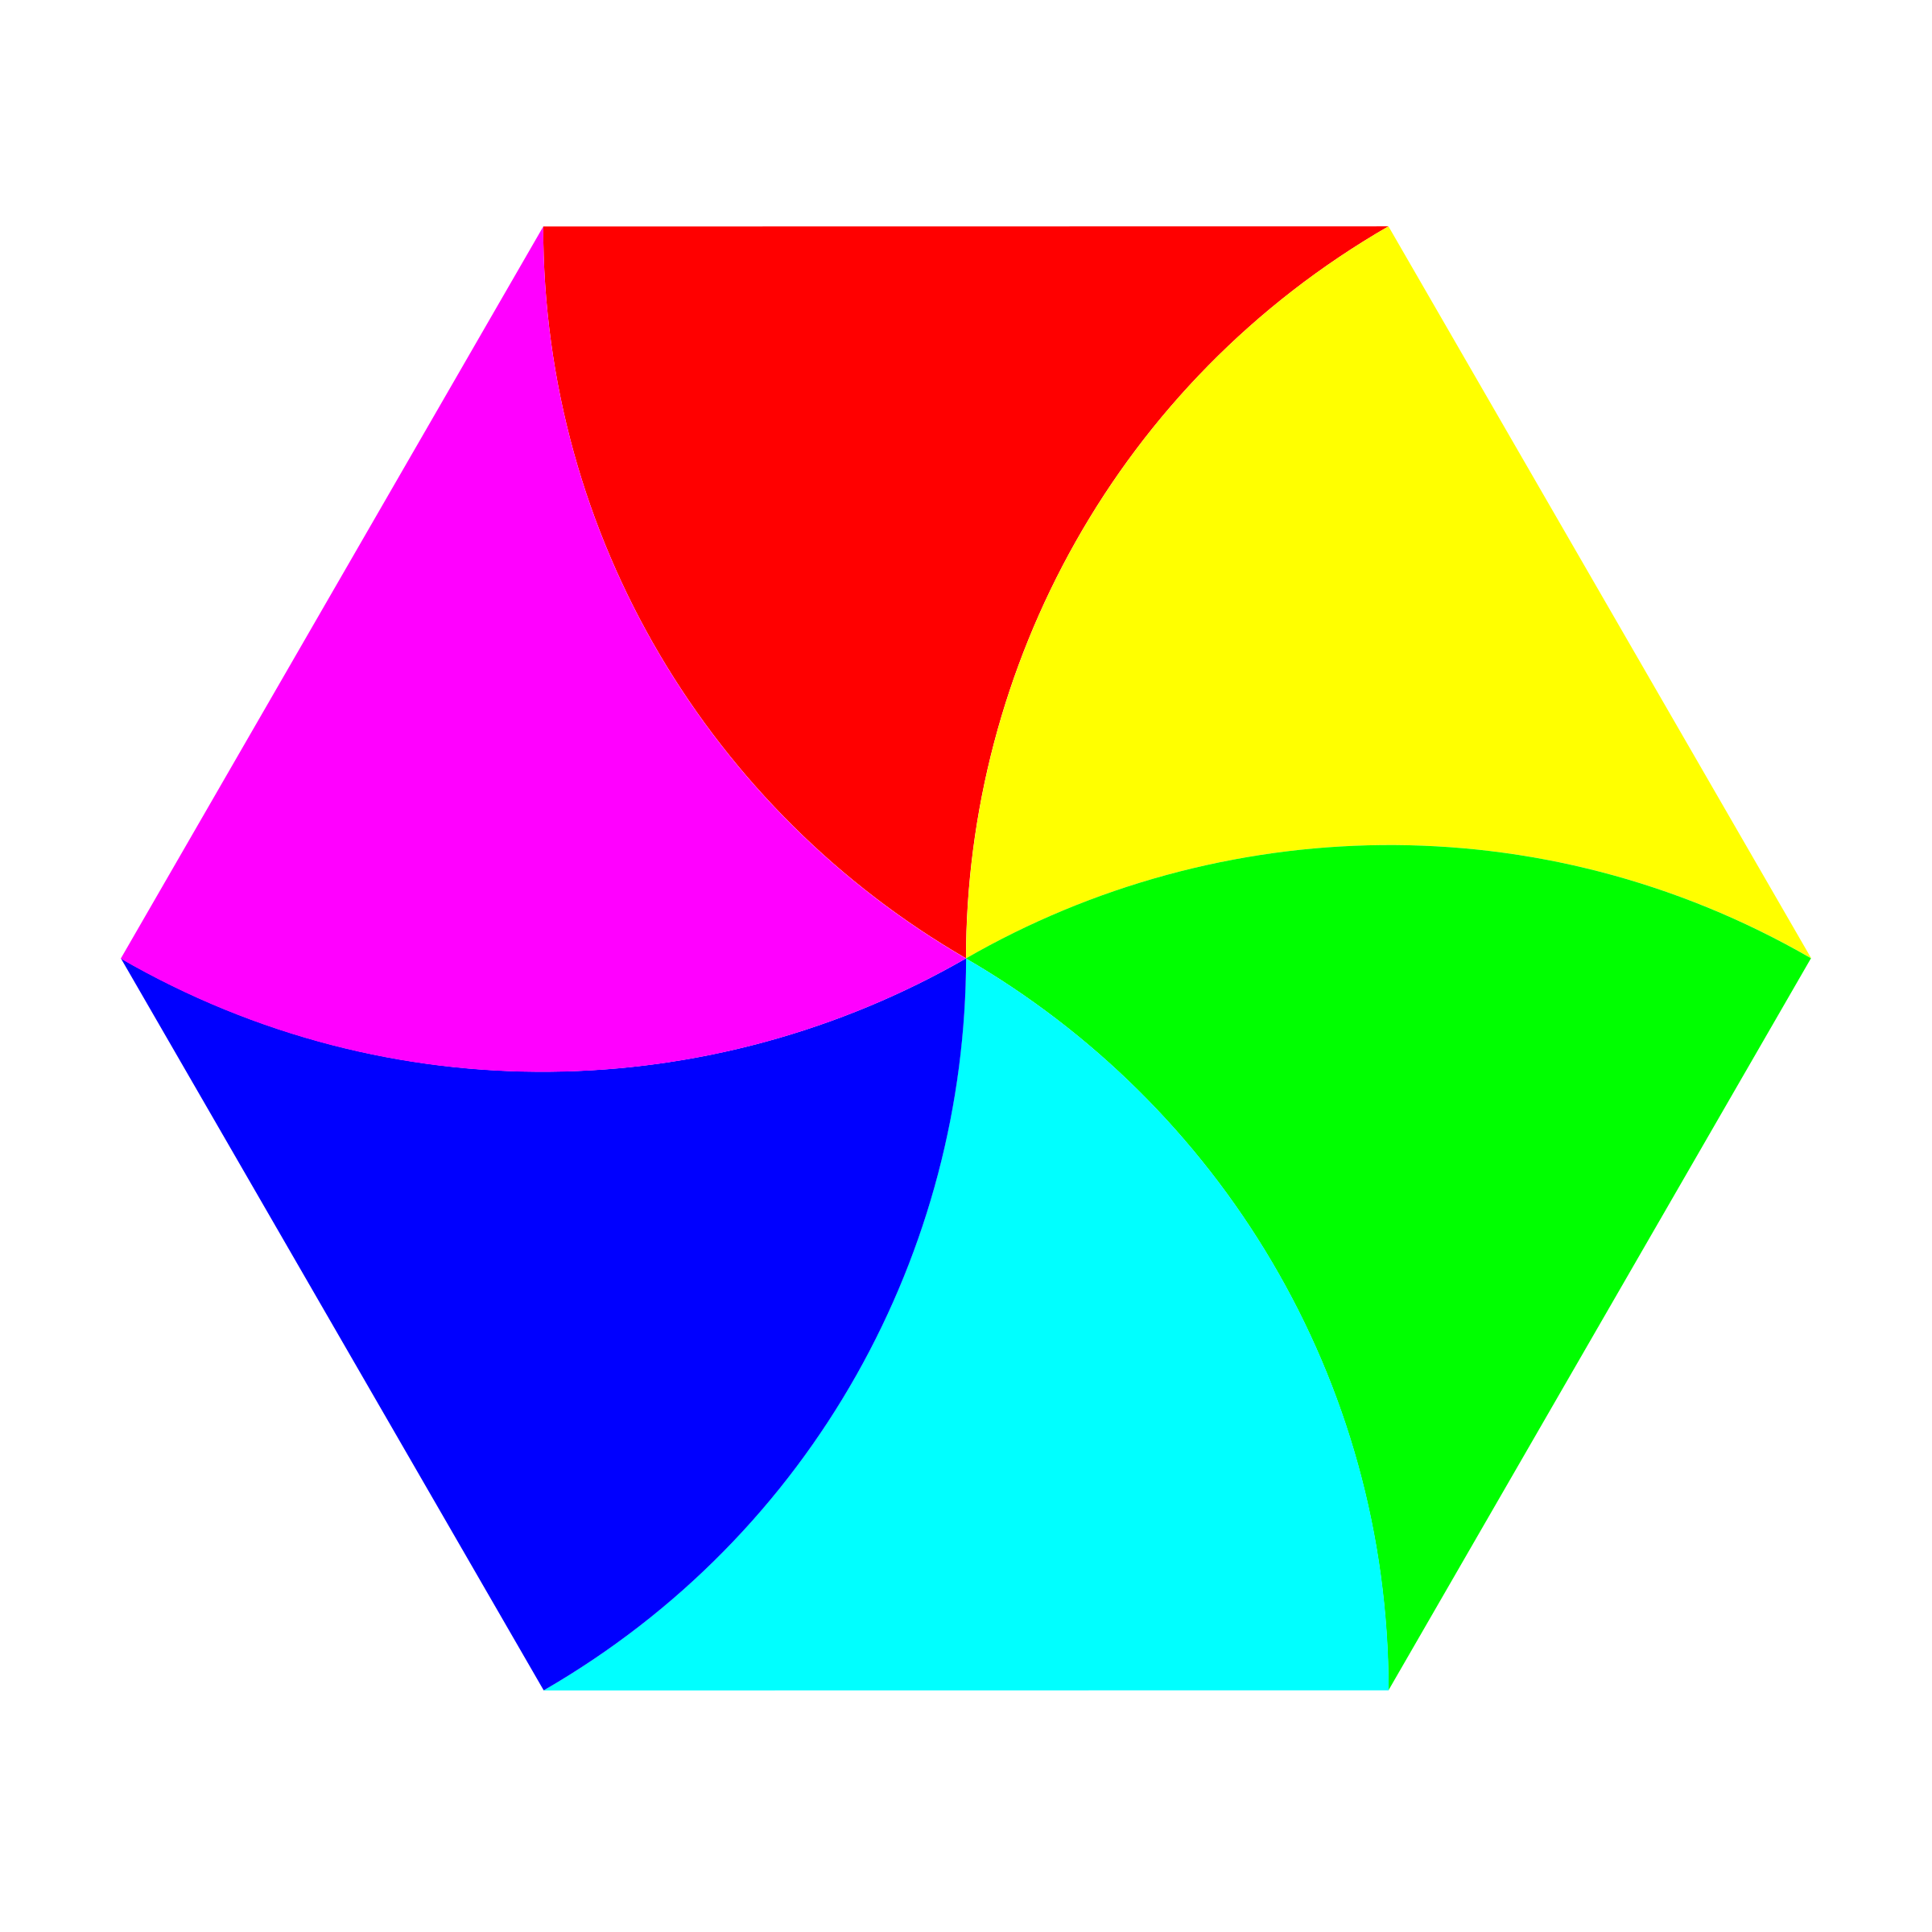 Hexagon Shape Clip art - hexagon png download - 2400*2400 - Free ...